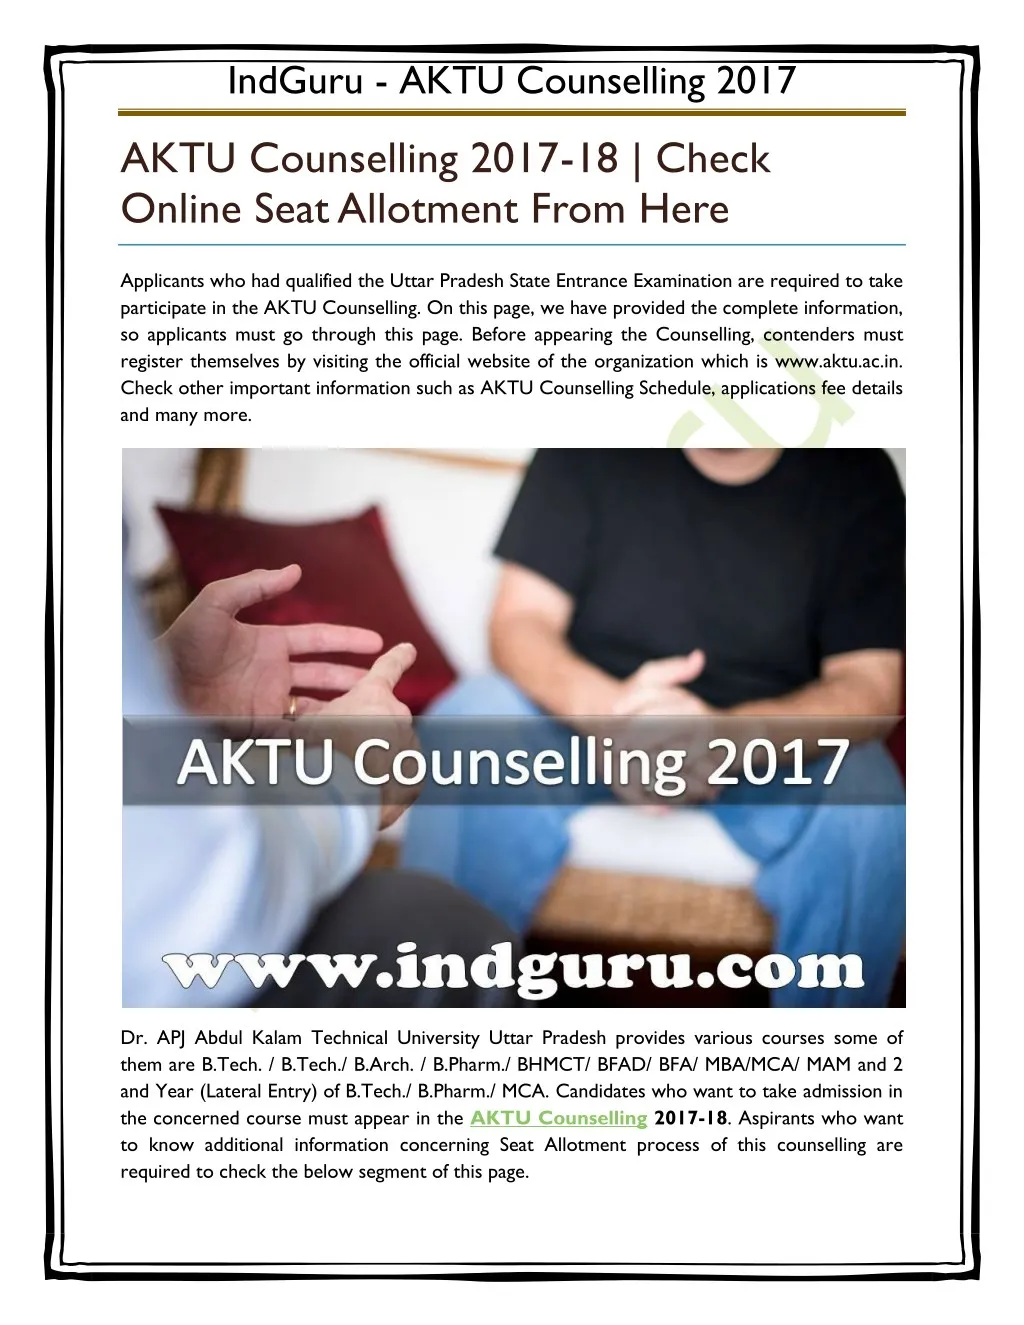 indguru aktu counselling 2017